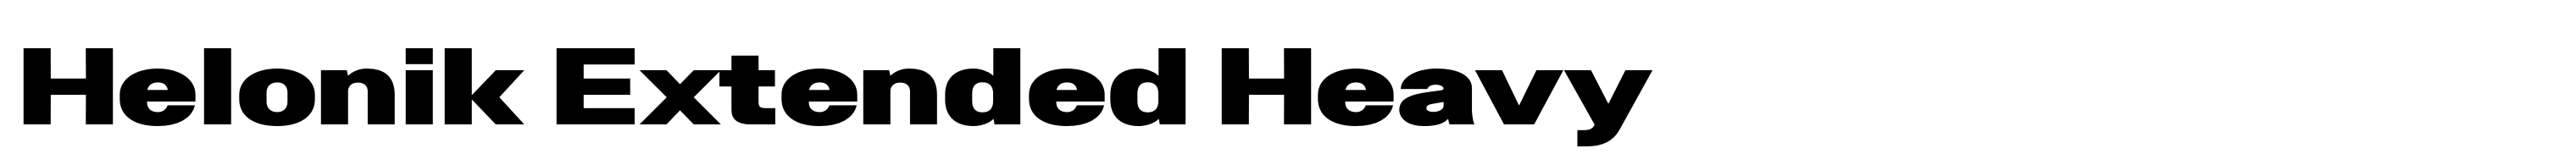 Helonik Extended Heavy